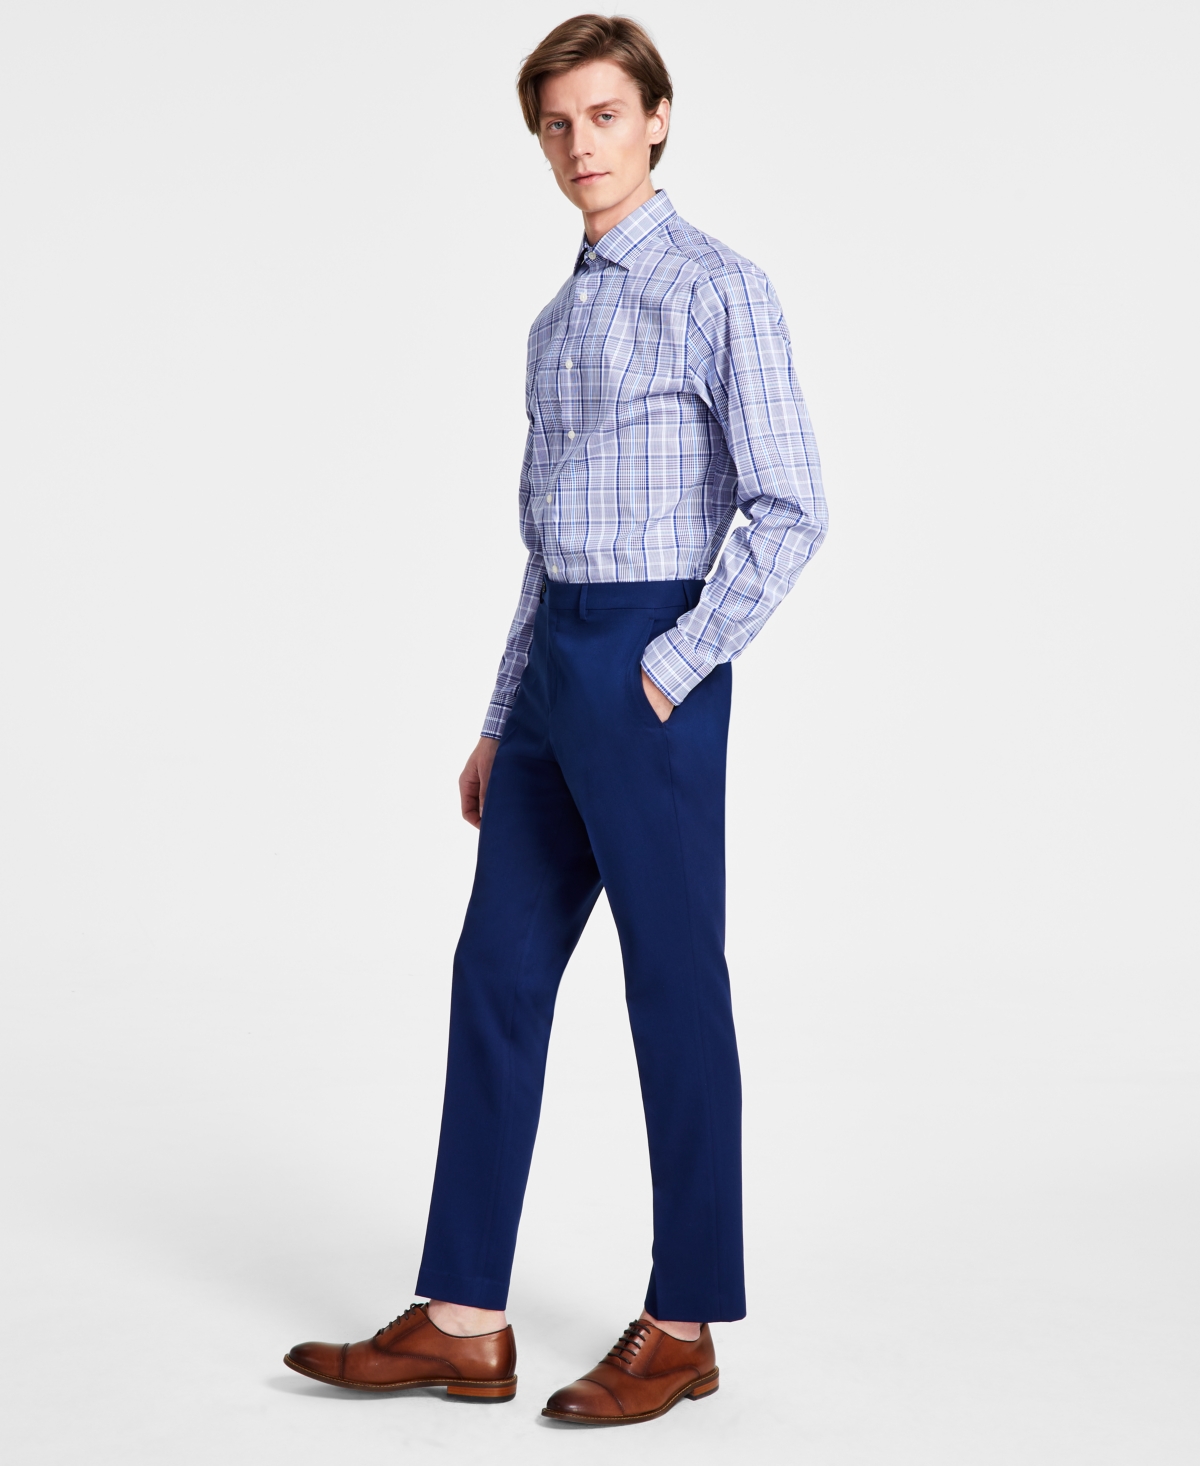 Men's Modern-Fit Solid Dress Pants - Tan